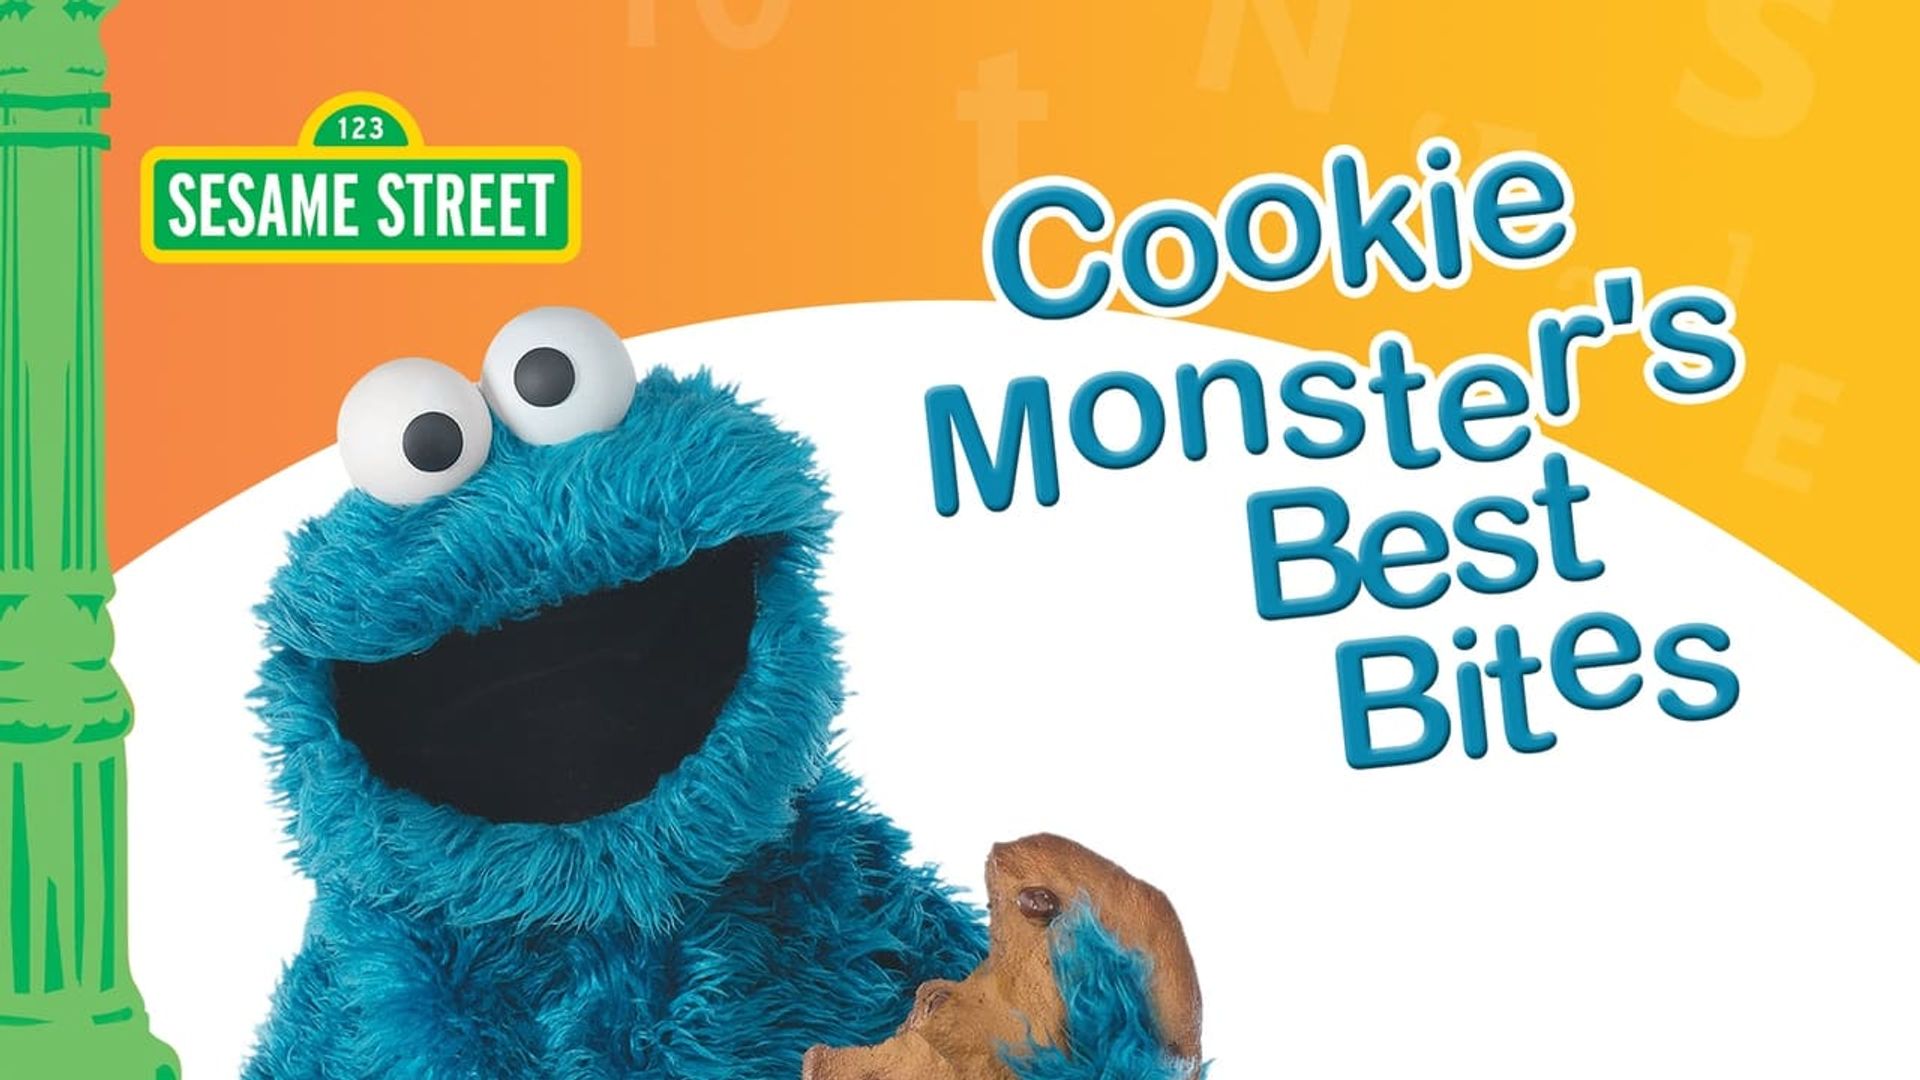 Sesame Street: Cookie Monster's Best Bites background